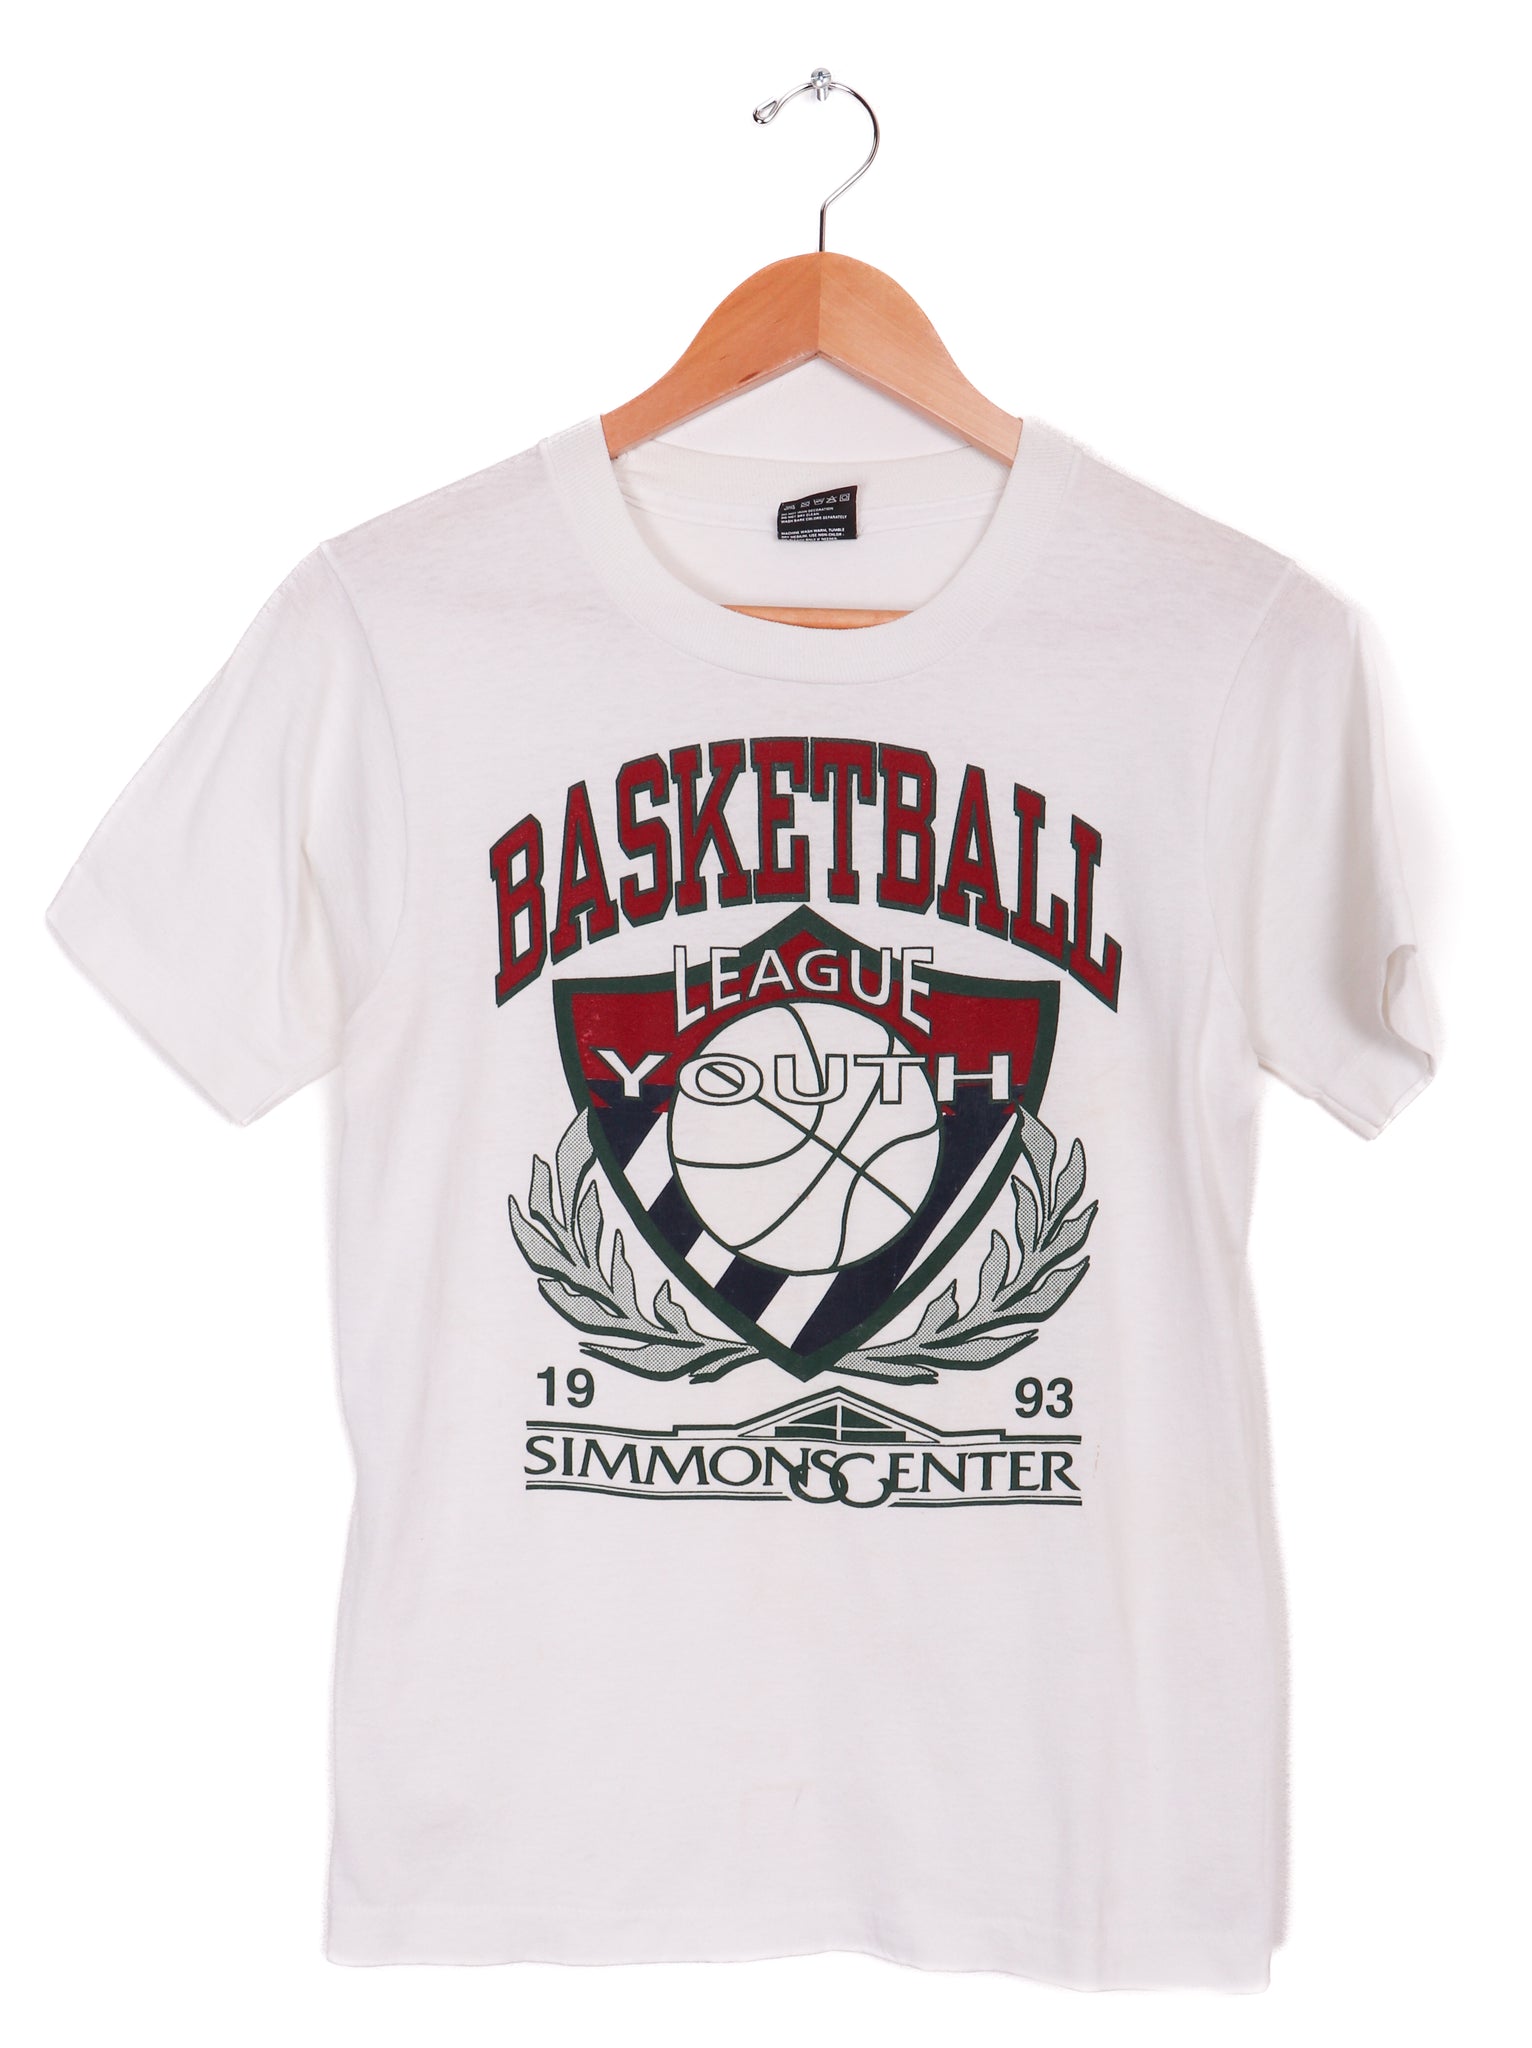 1993 Basketball Youth League T-Shirt